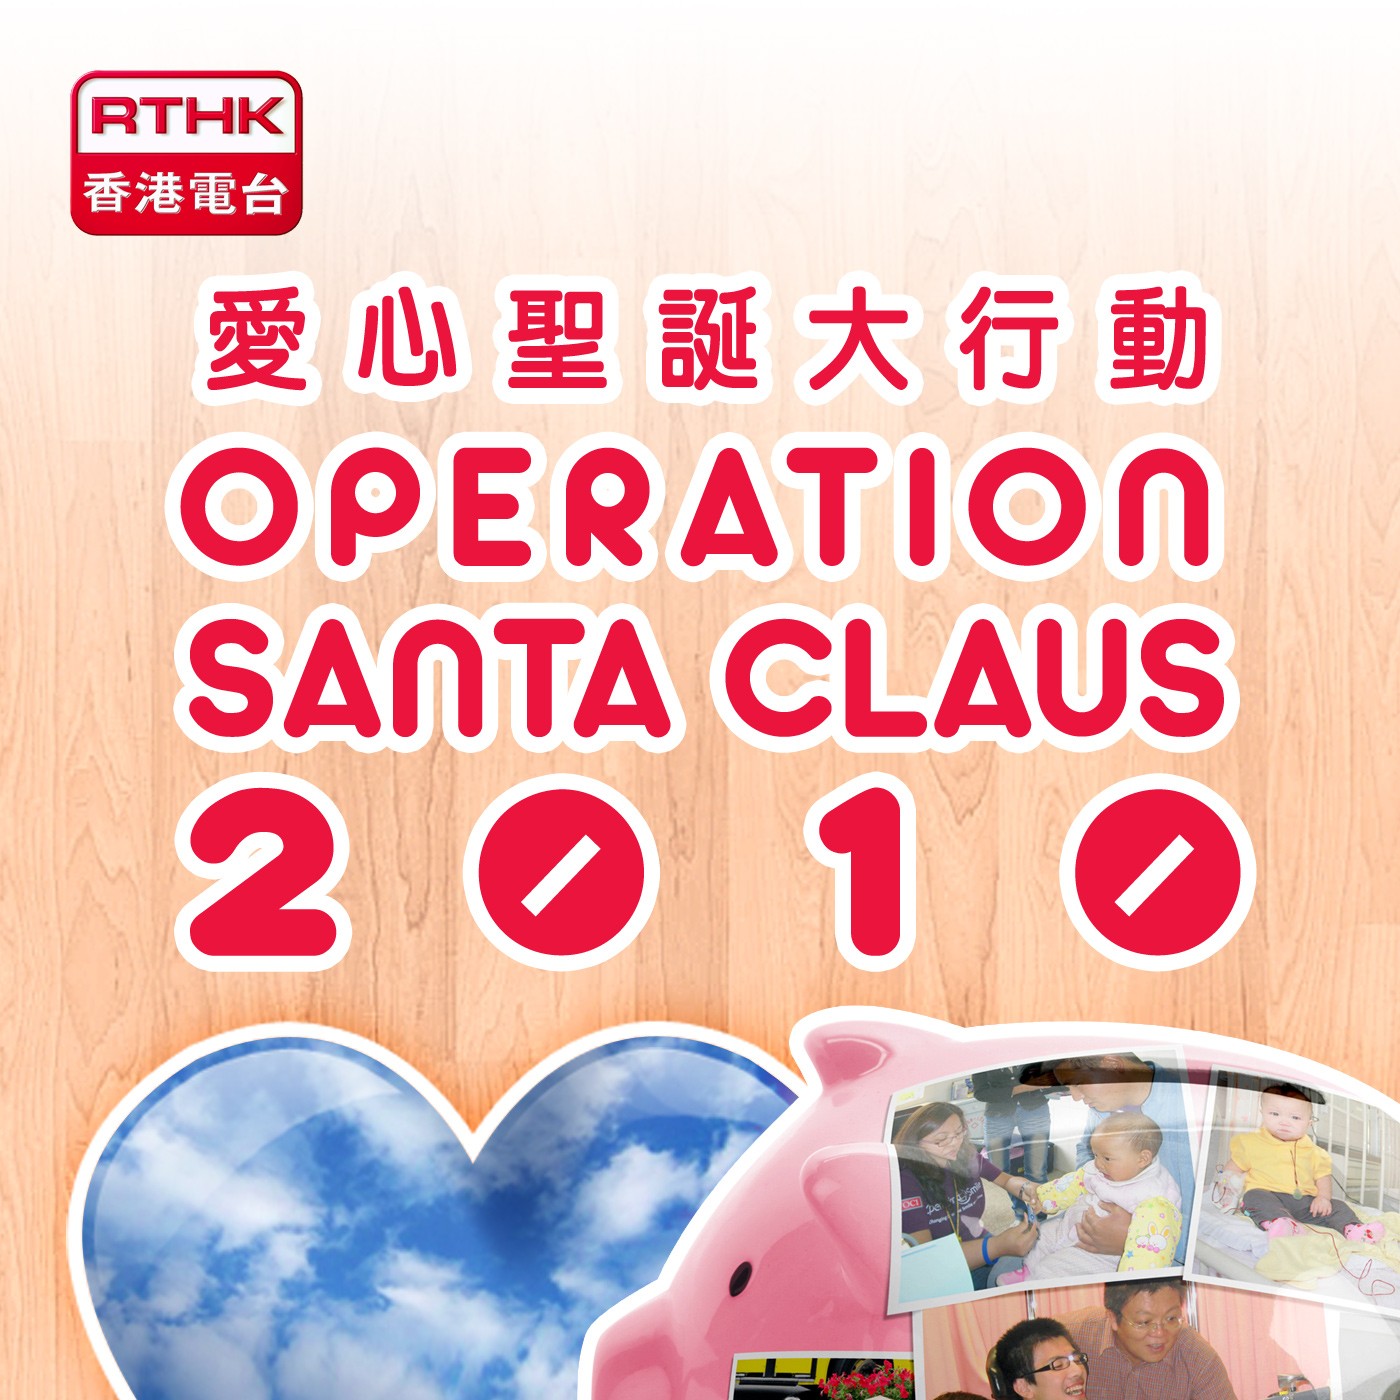 RTHK：Operation Santa Claus 2010